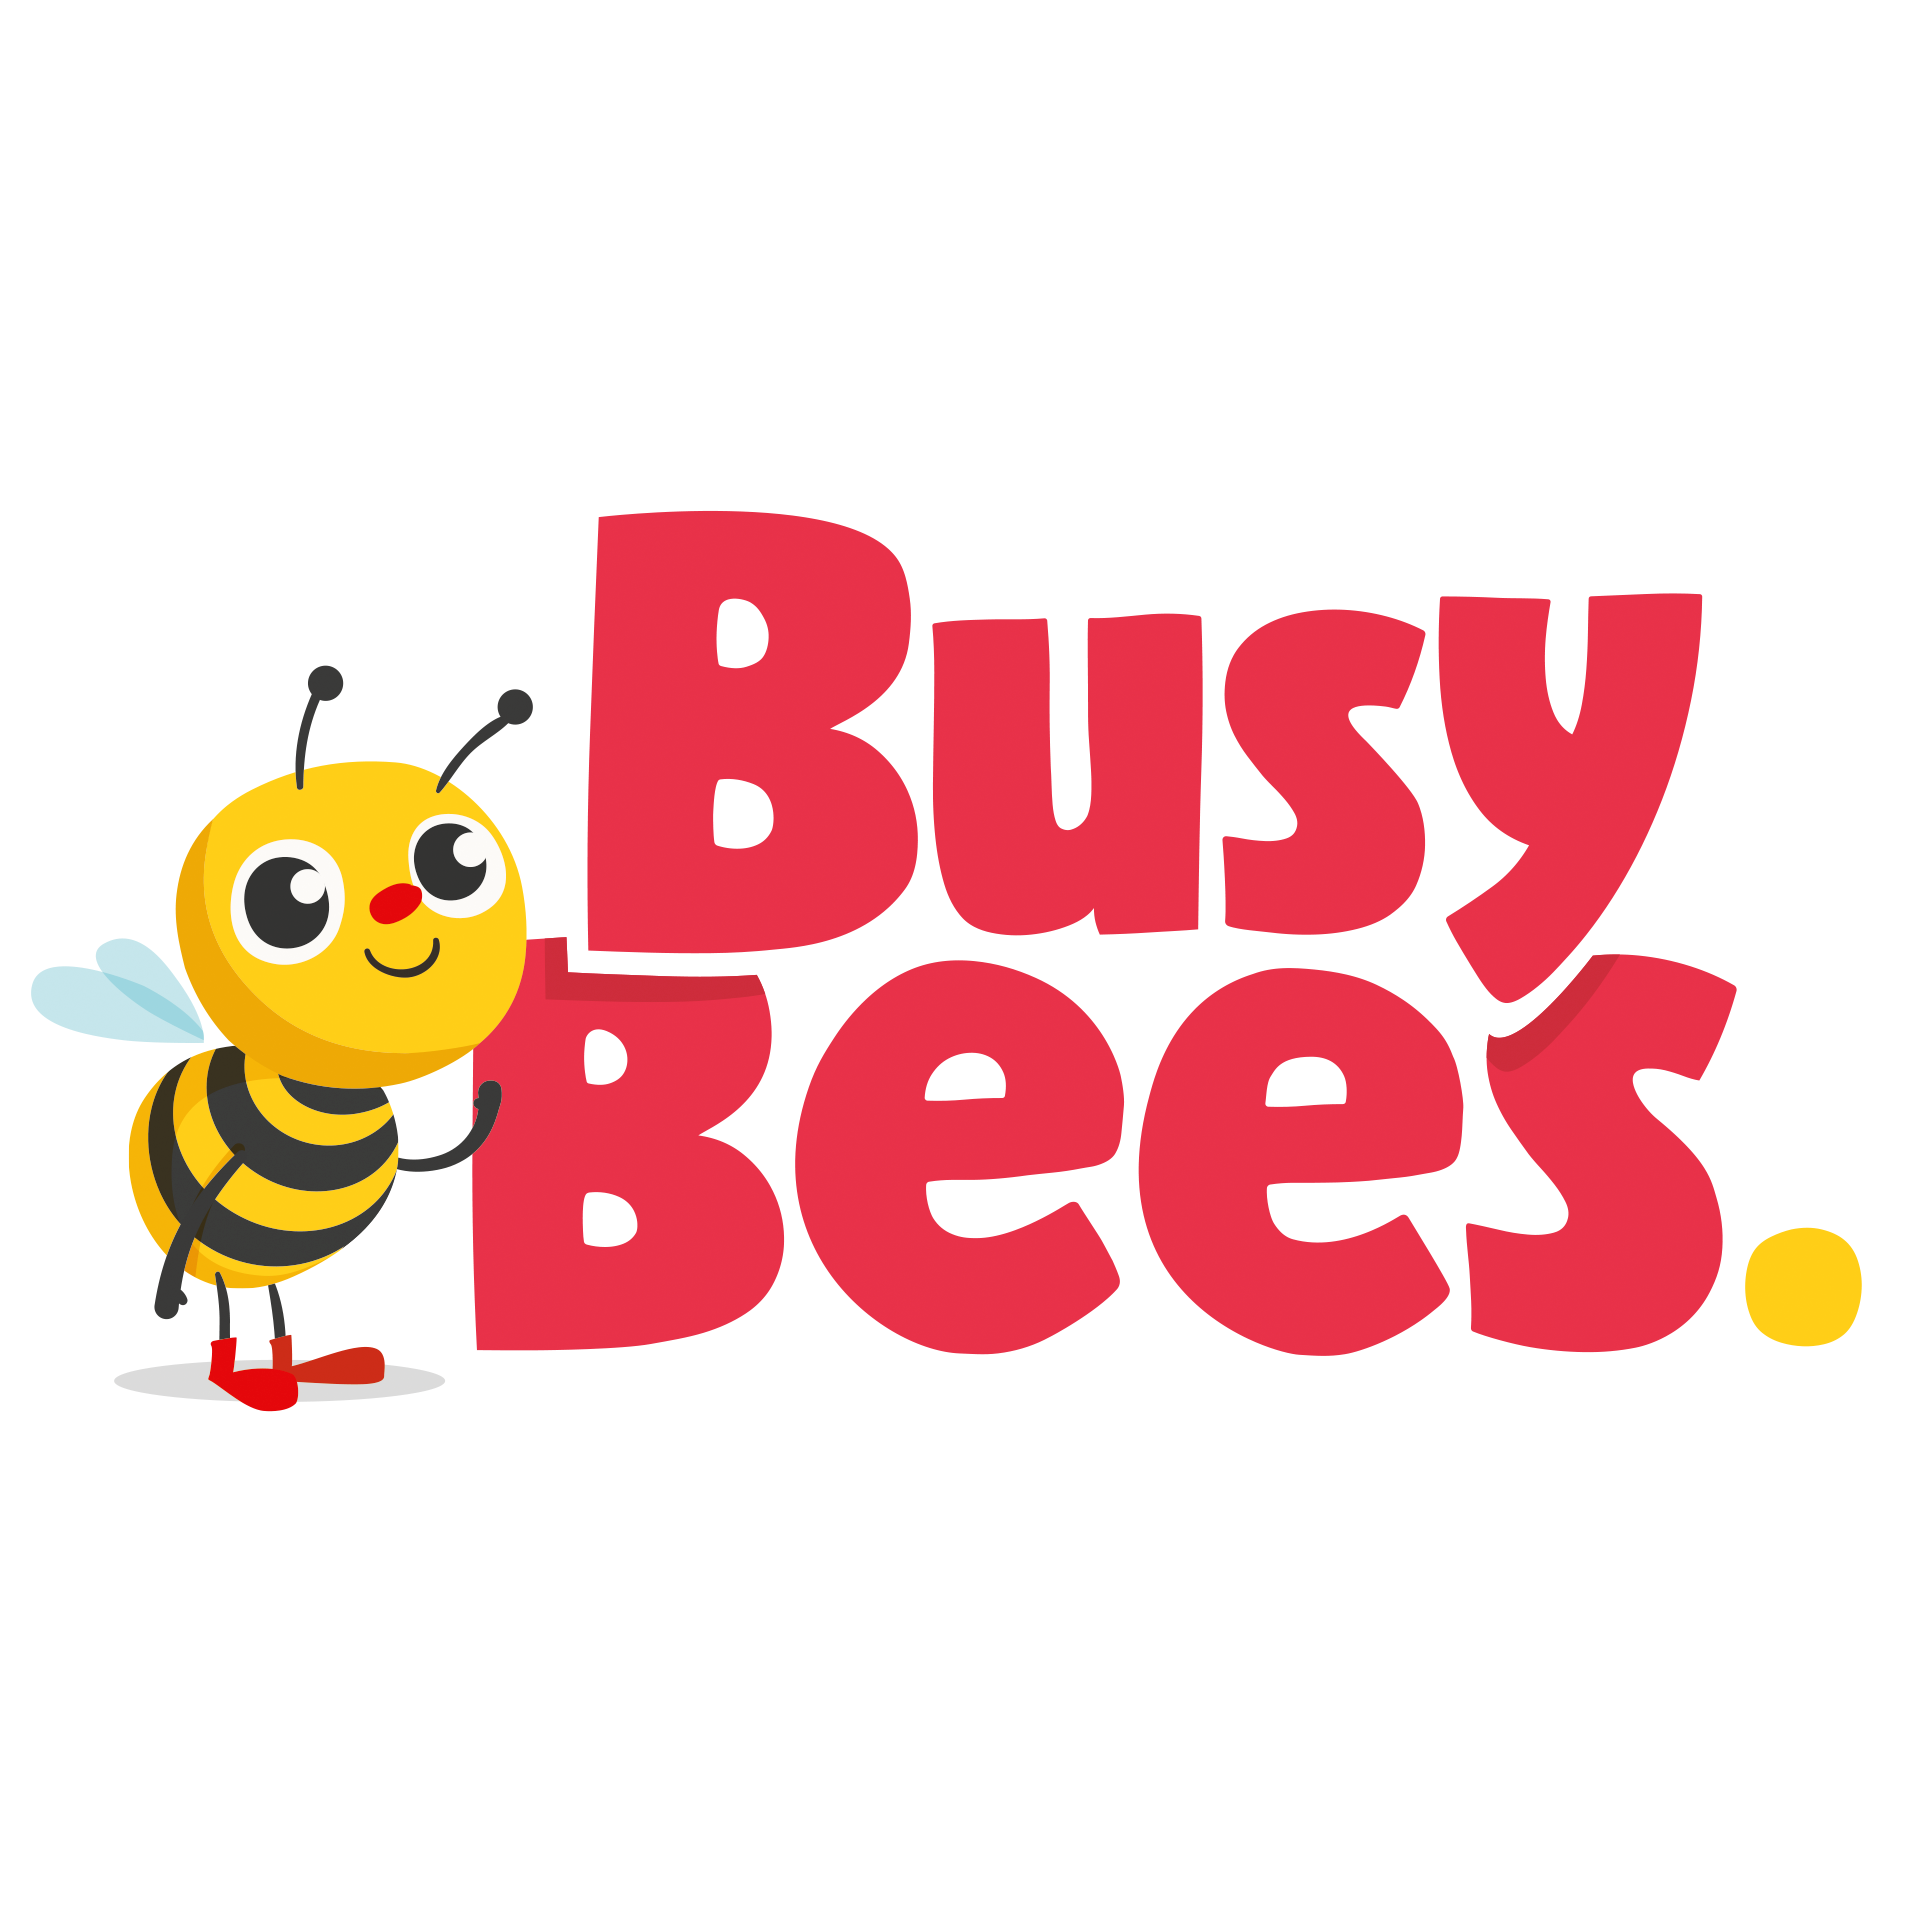 Busy Bees at Thorley Park Bishop's Stortford 01279 654830